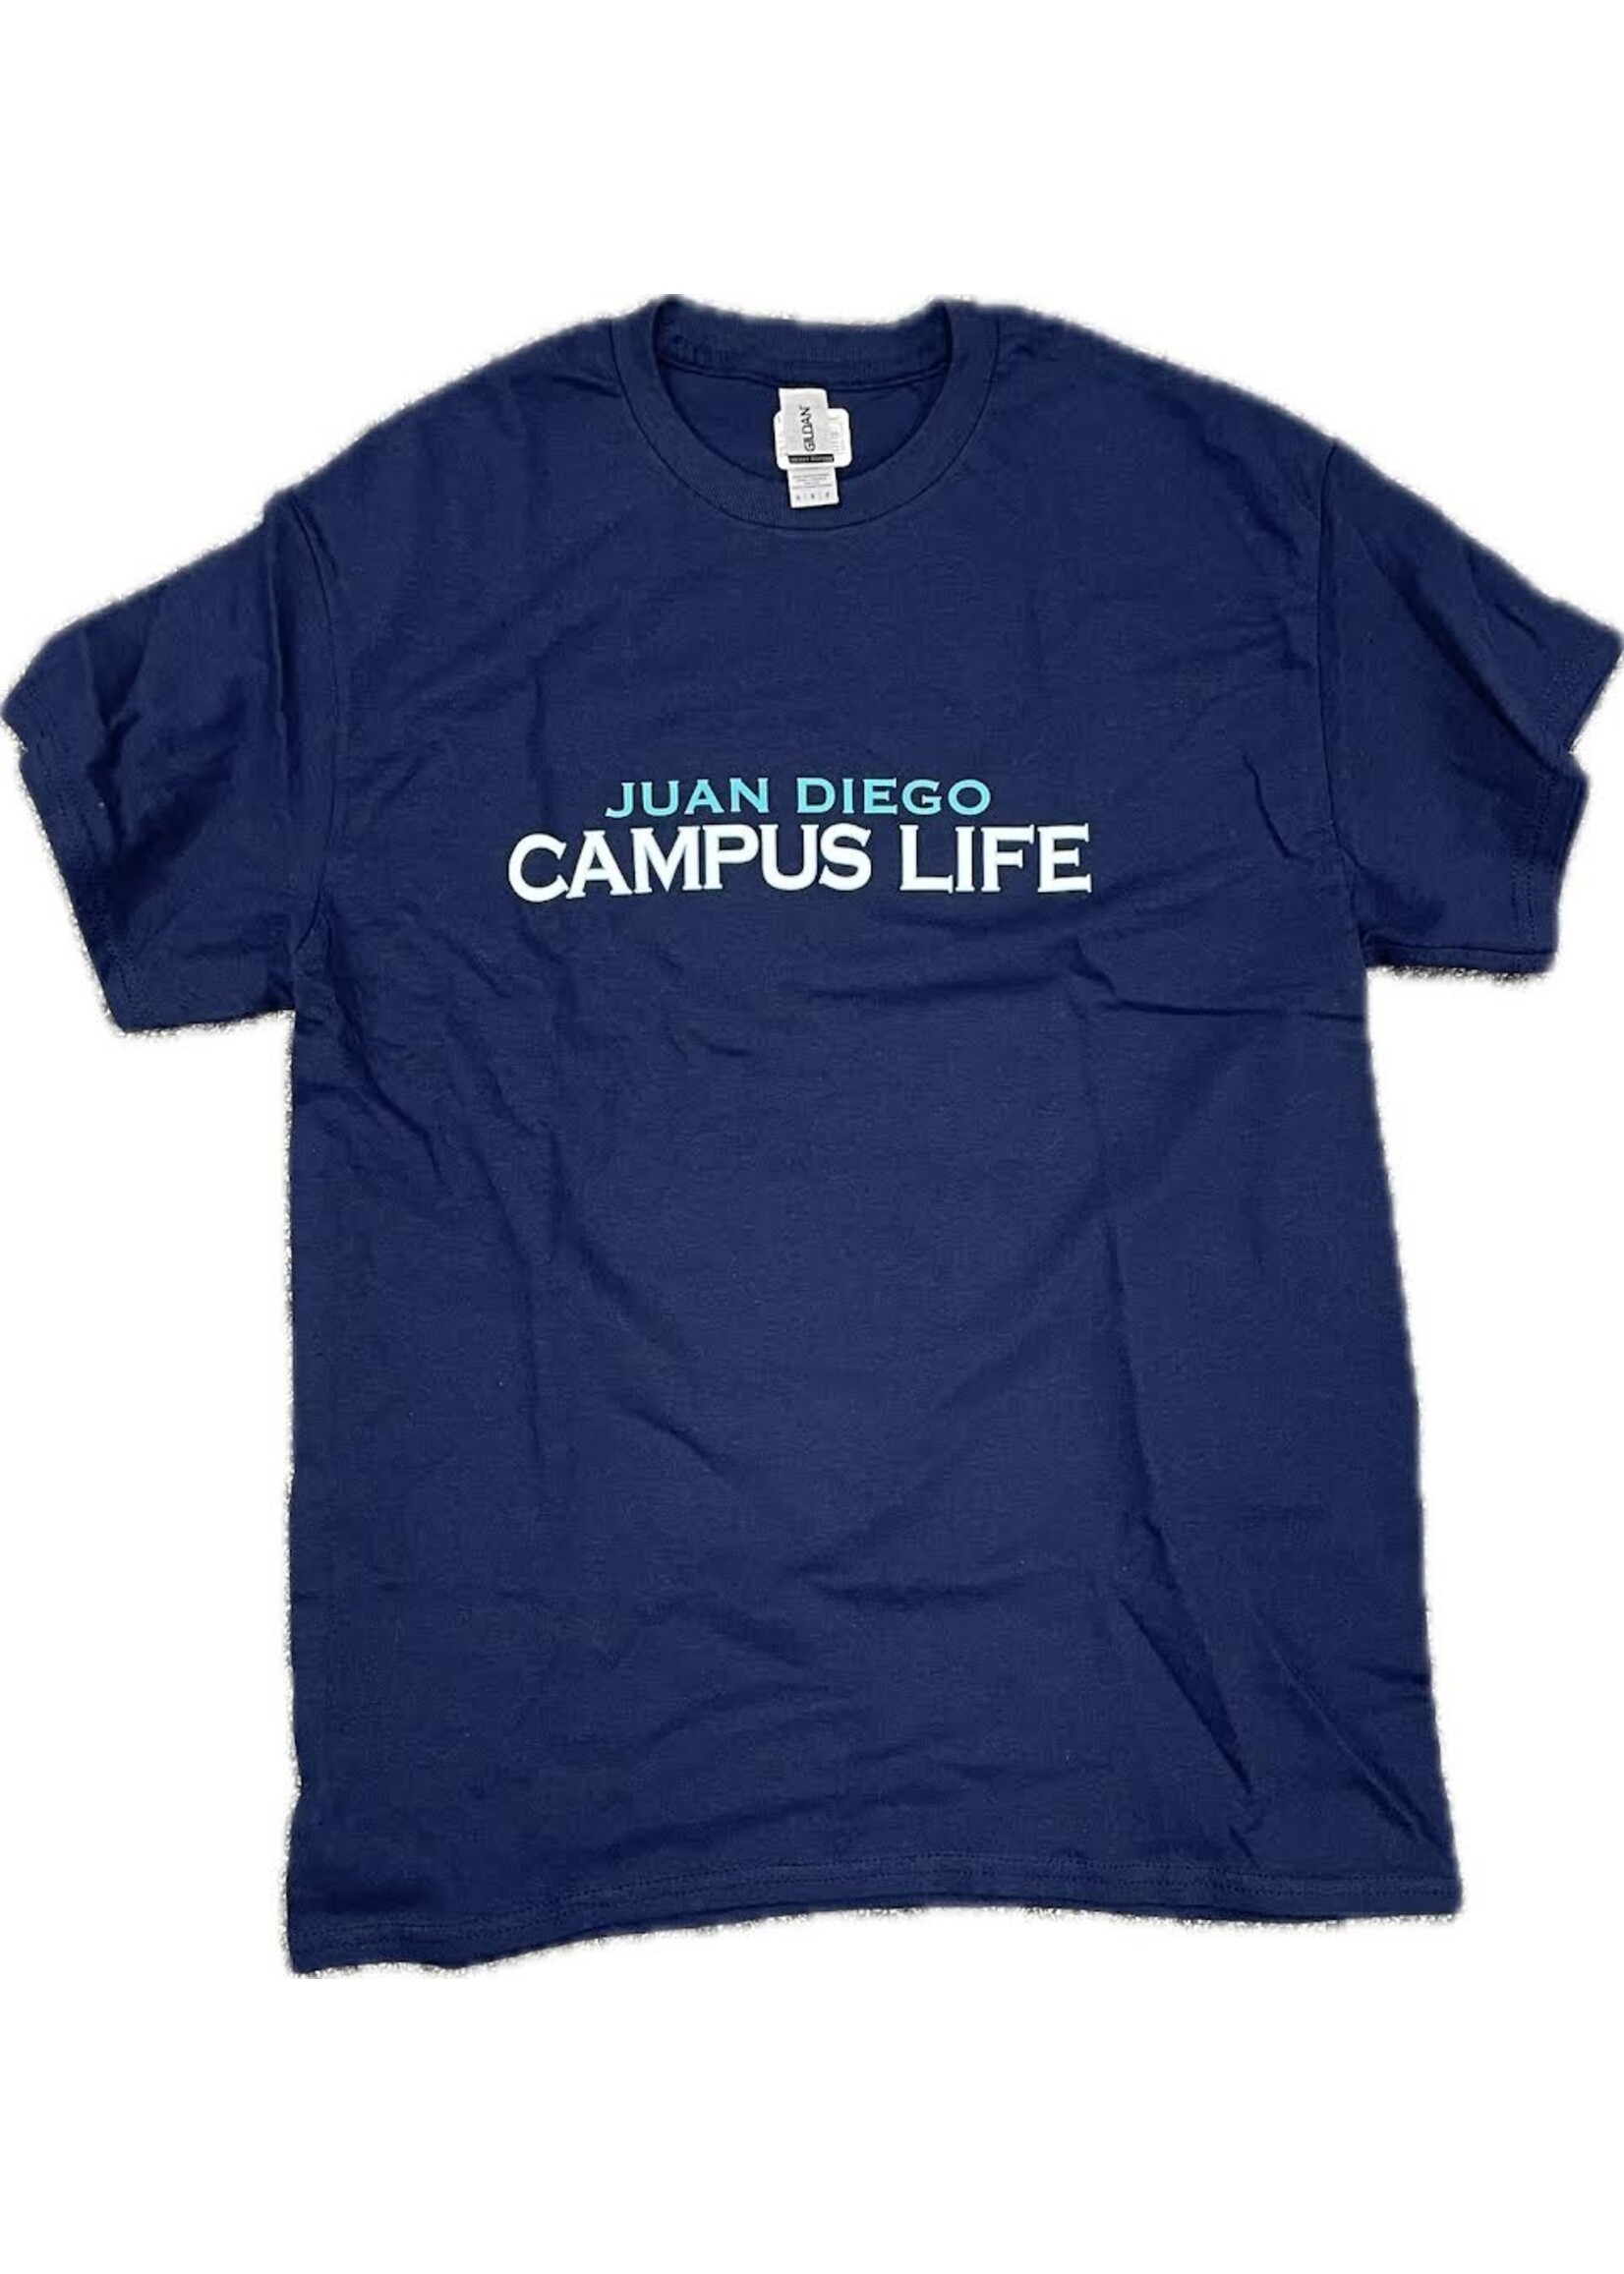 NON-UNIFORM JD Campus Life - Spirit Shirt, Unisex